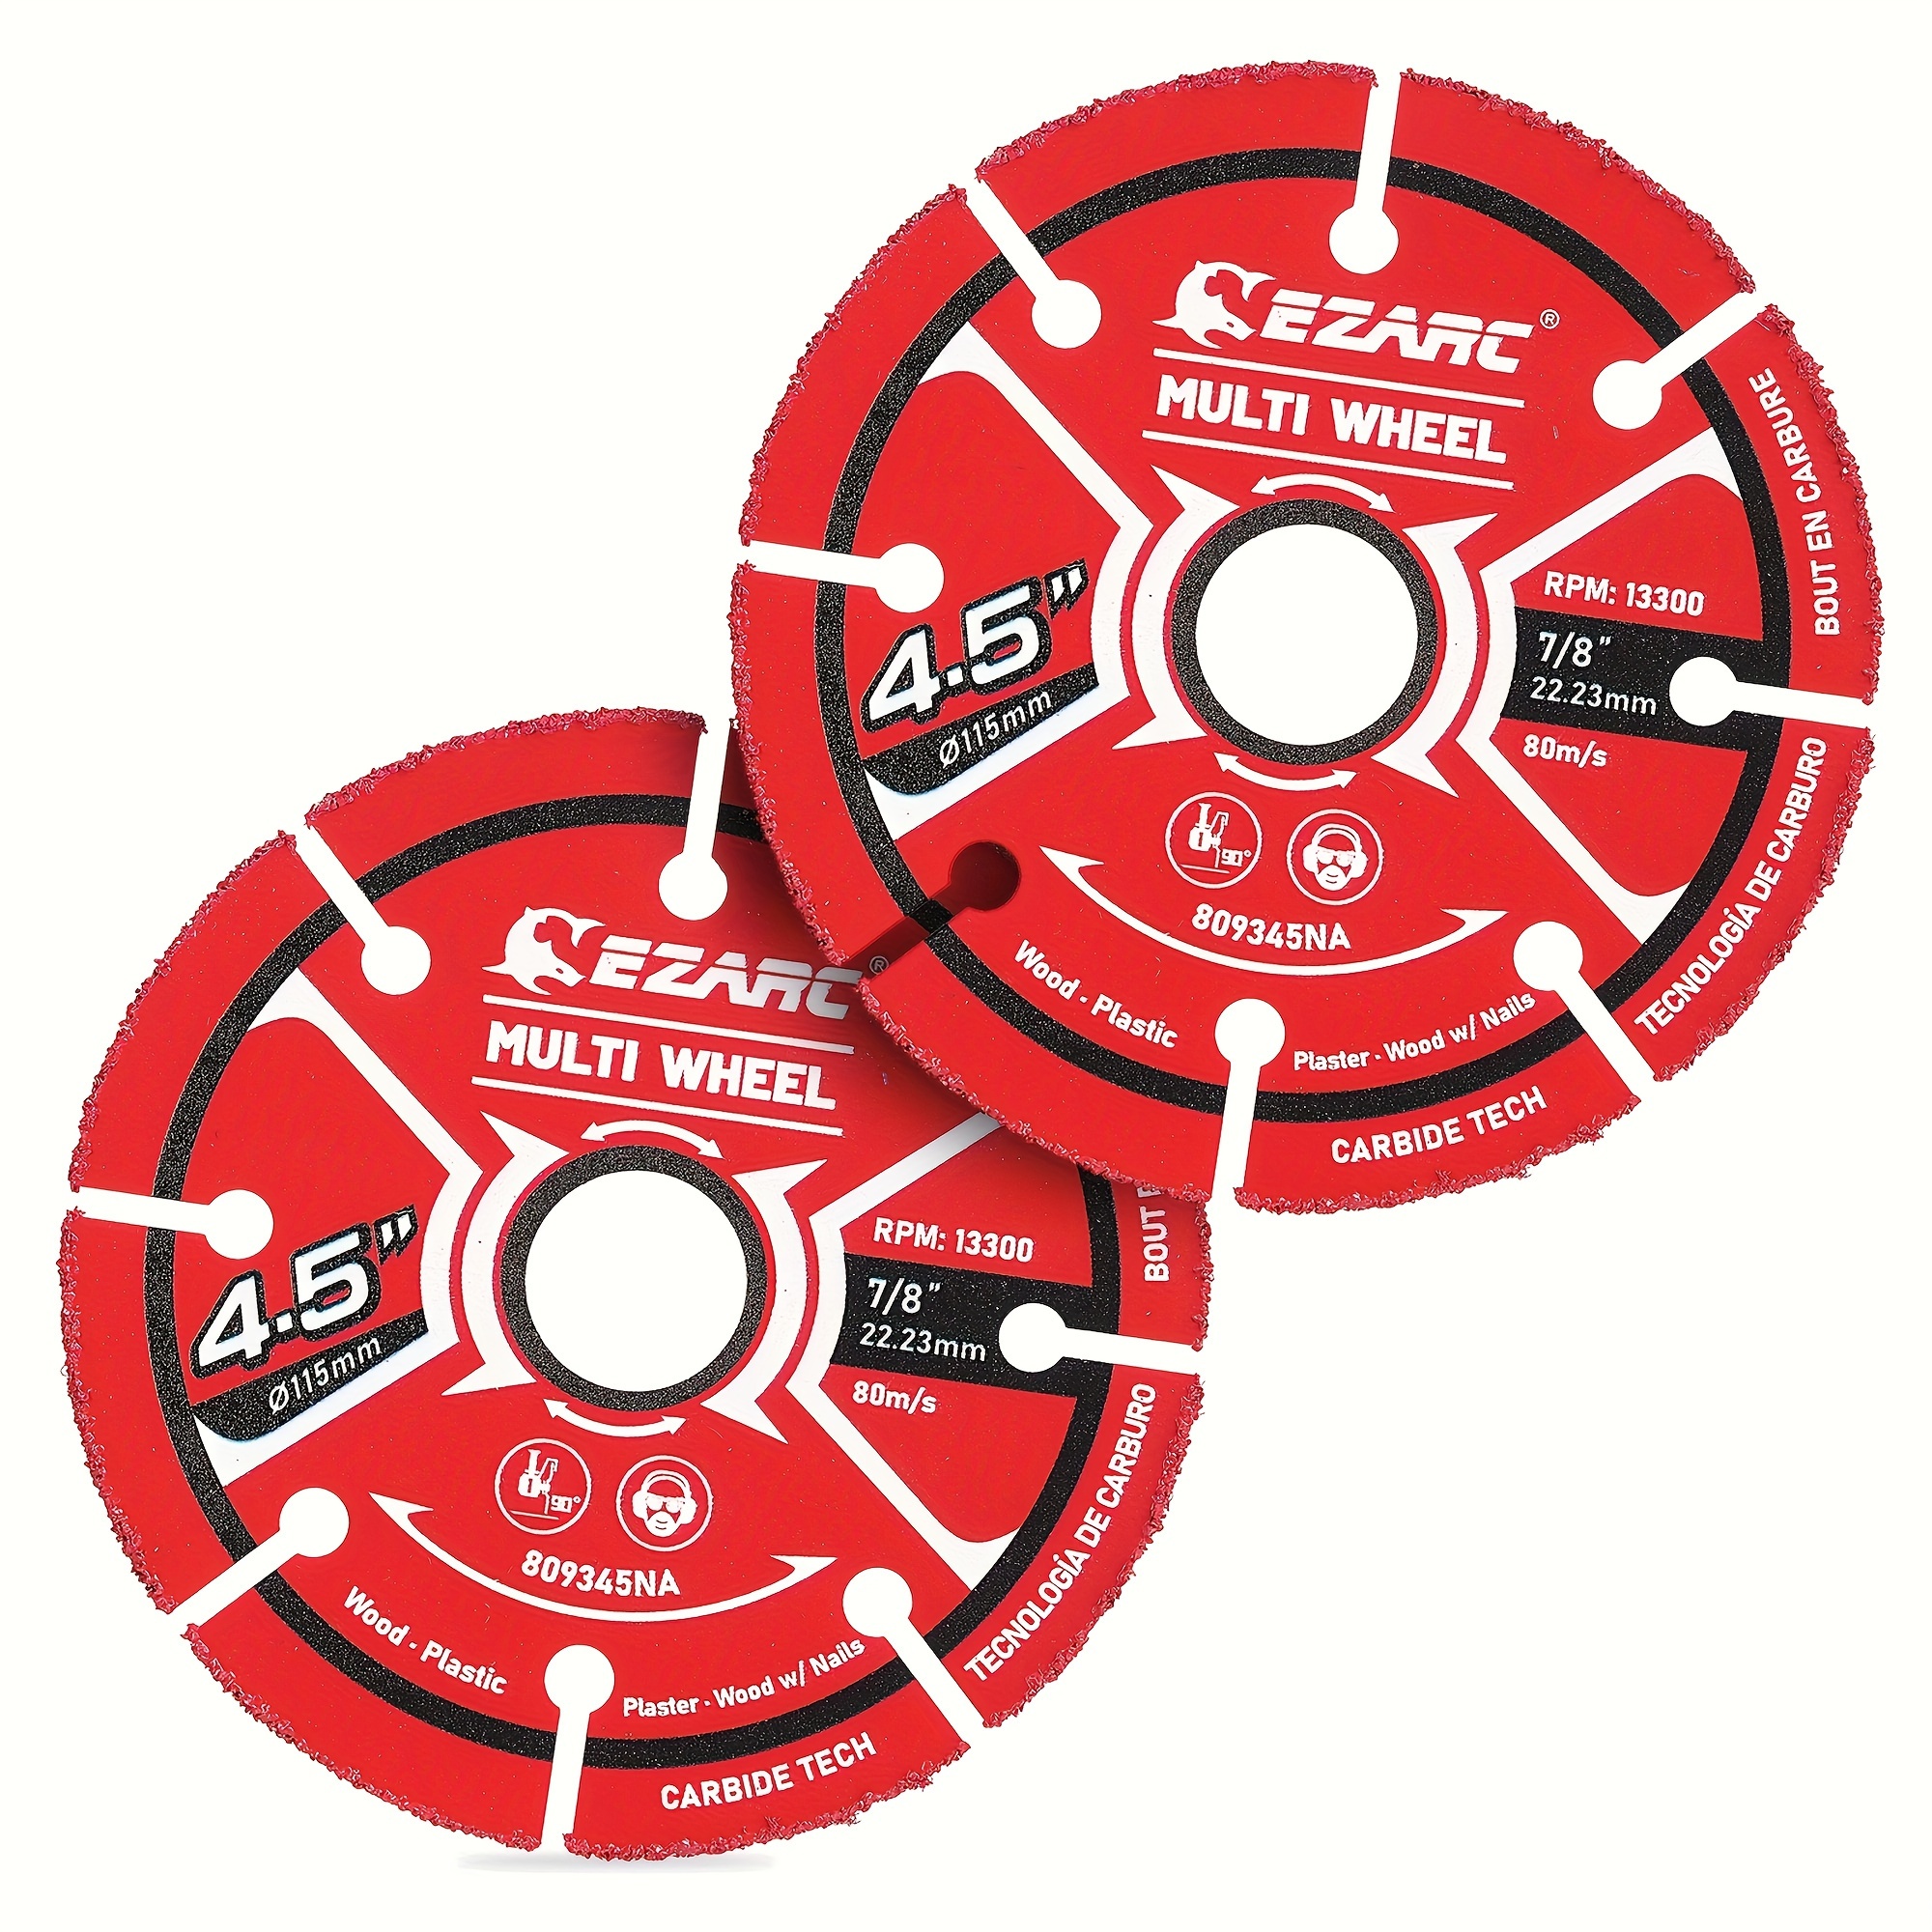 

2pcs Ezarc 4.5 Inch Carbide Grit Cut Off Multi Wheels, Cutting Disc, Carbide Cutting Wheel For Wood, Wood With Nails, Laminate, Plastic, Plaster, Superior Durability